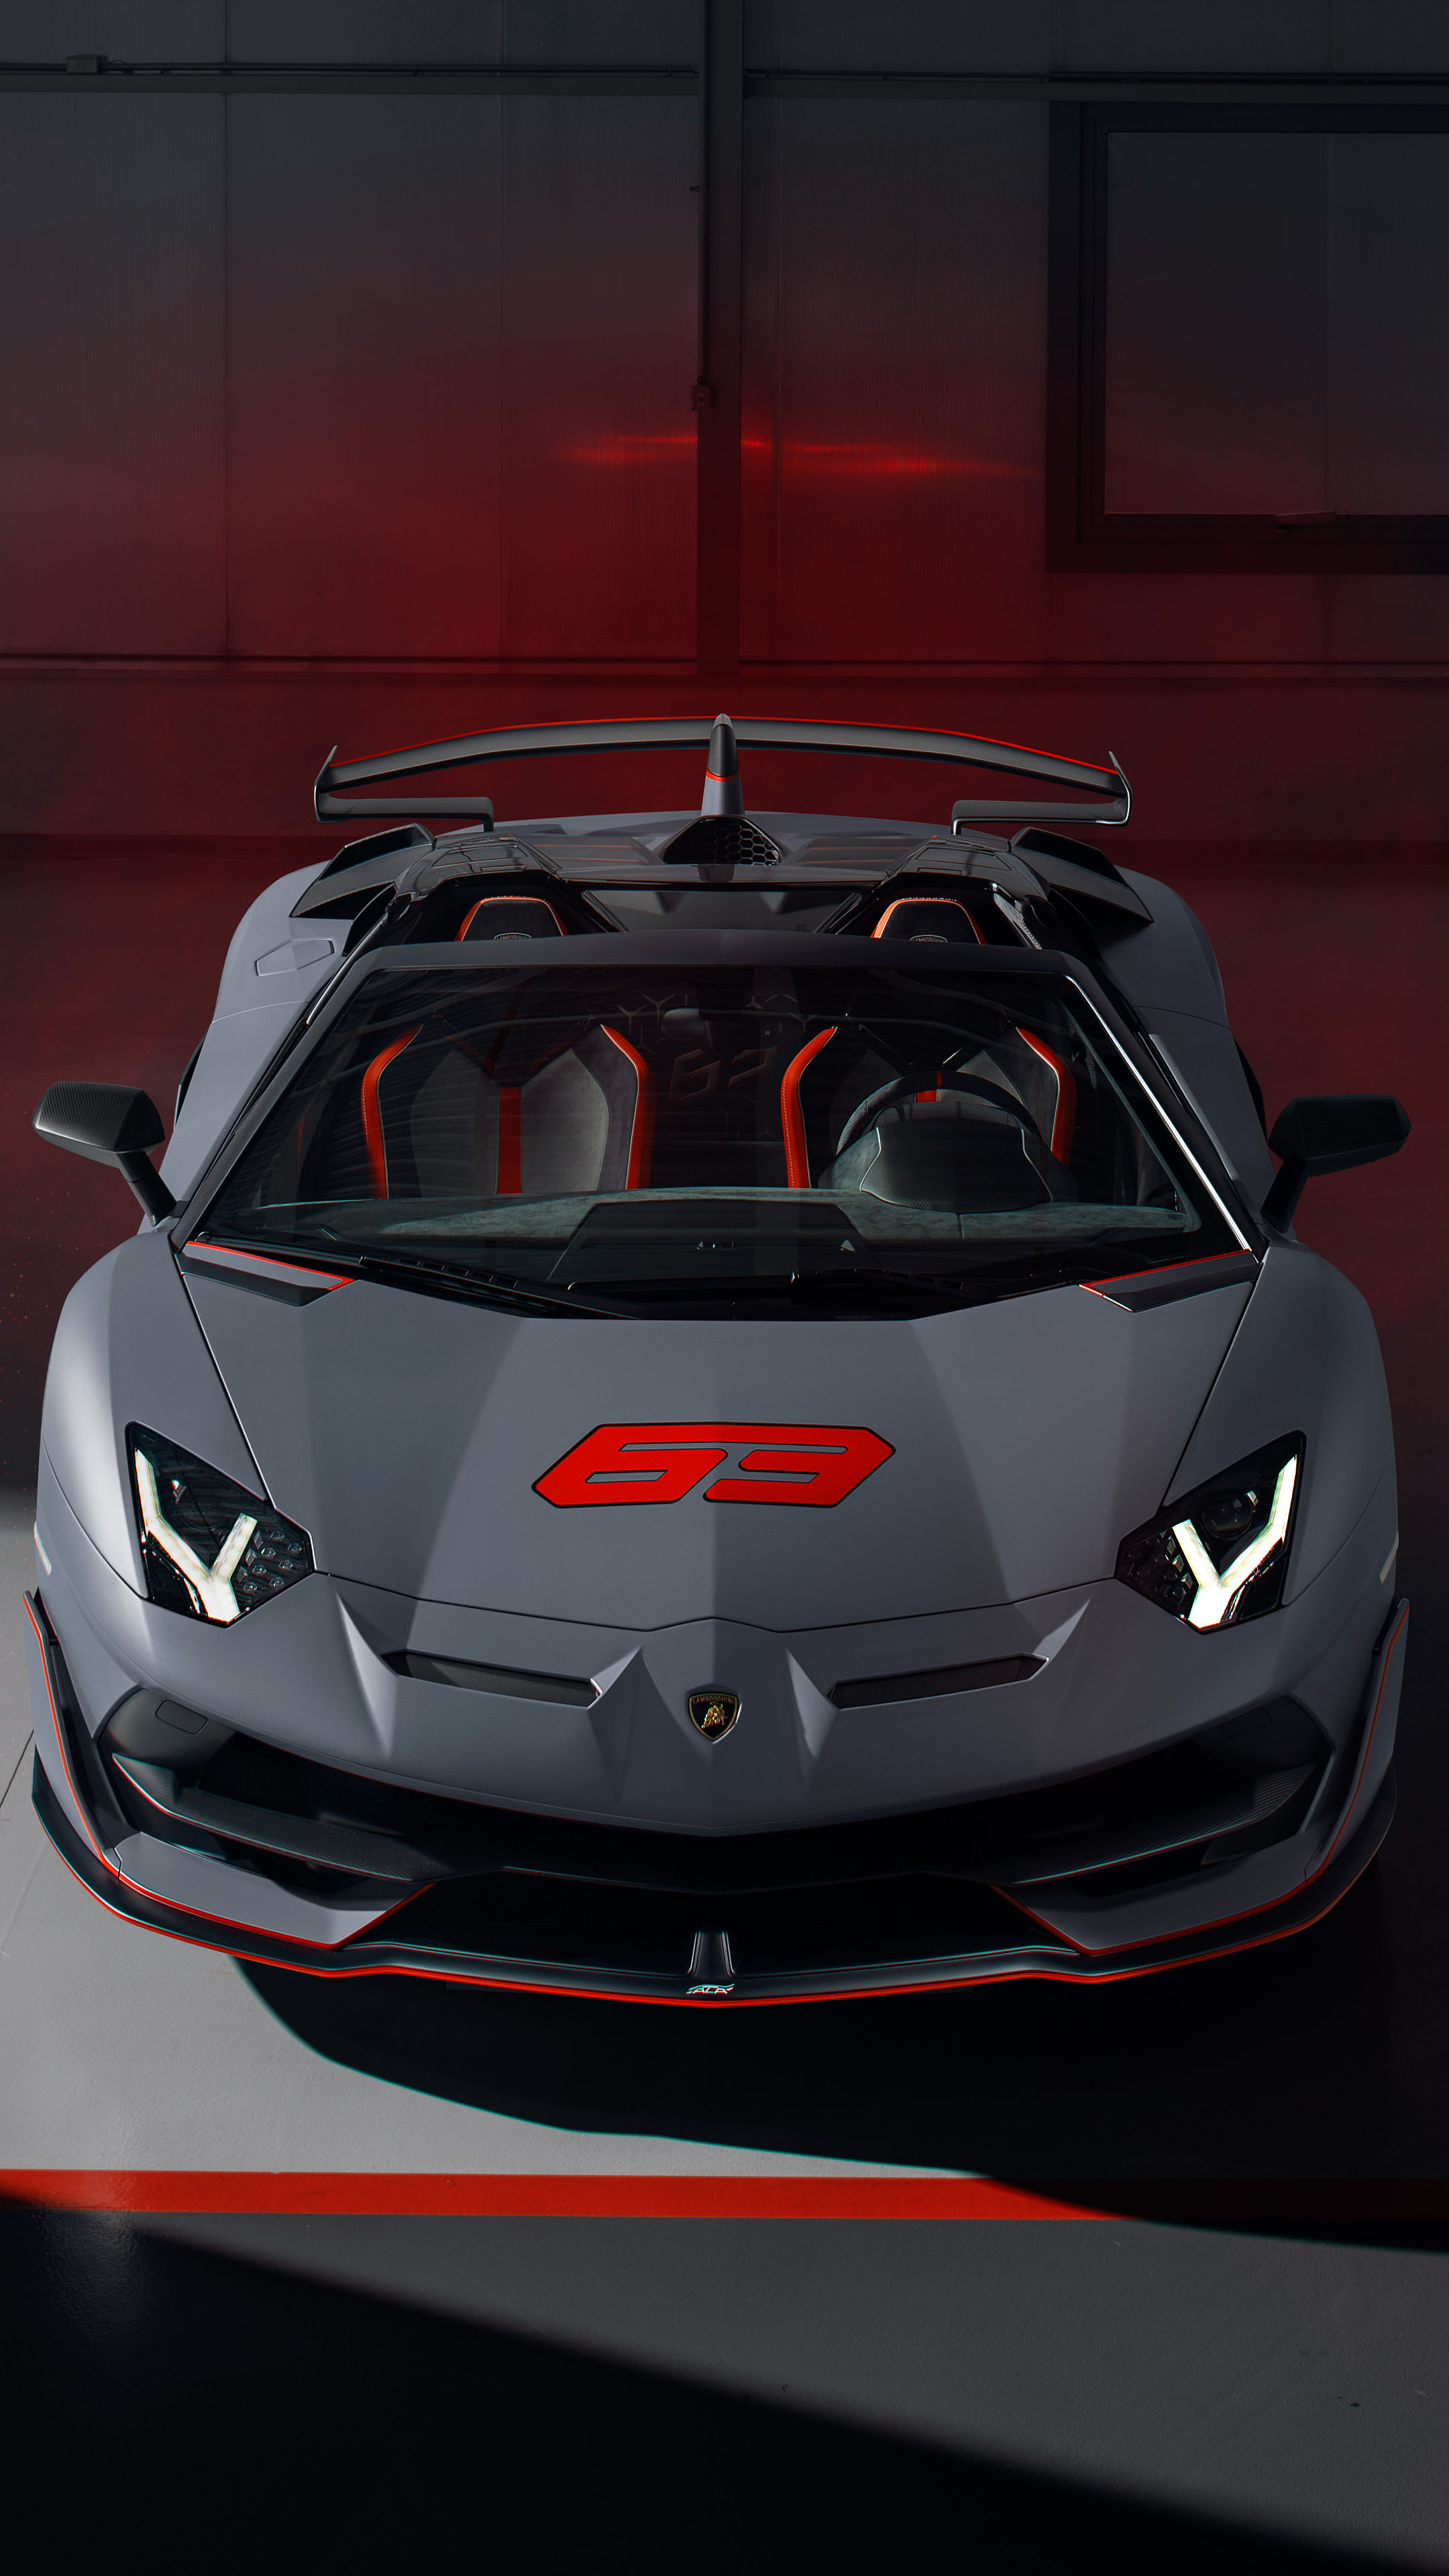 Lamborghini Aventador SVJ 63 Roadster 2020 Free 4K Ultra ...